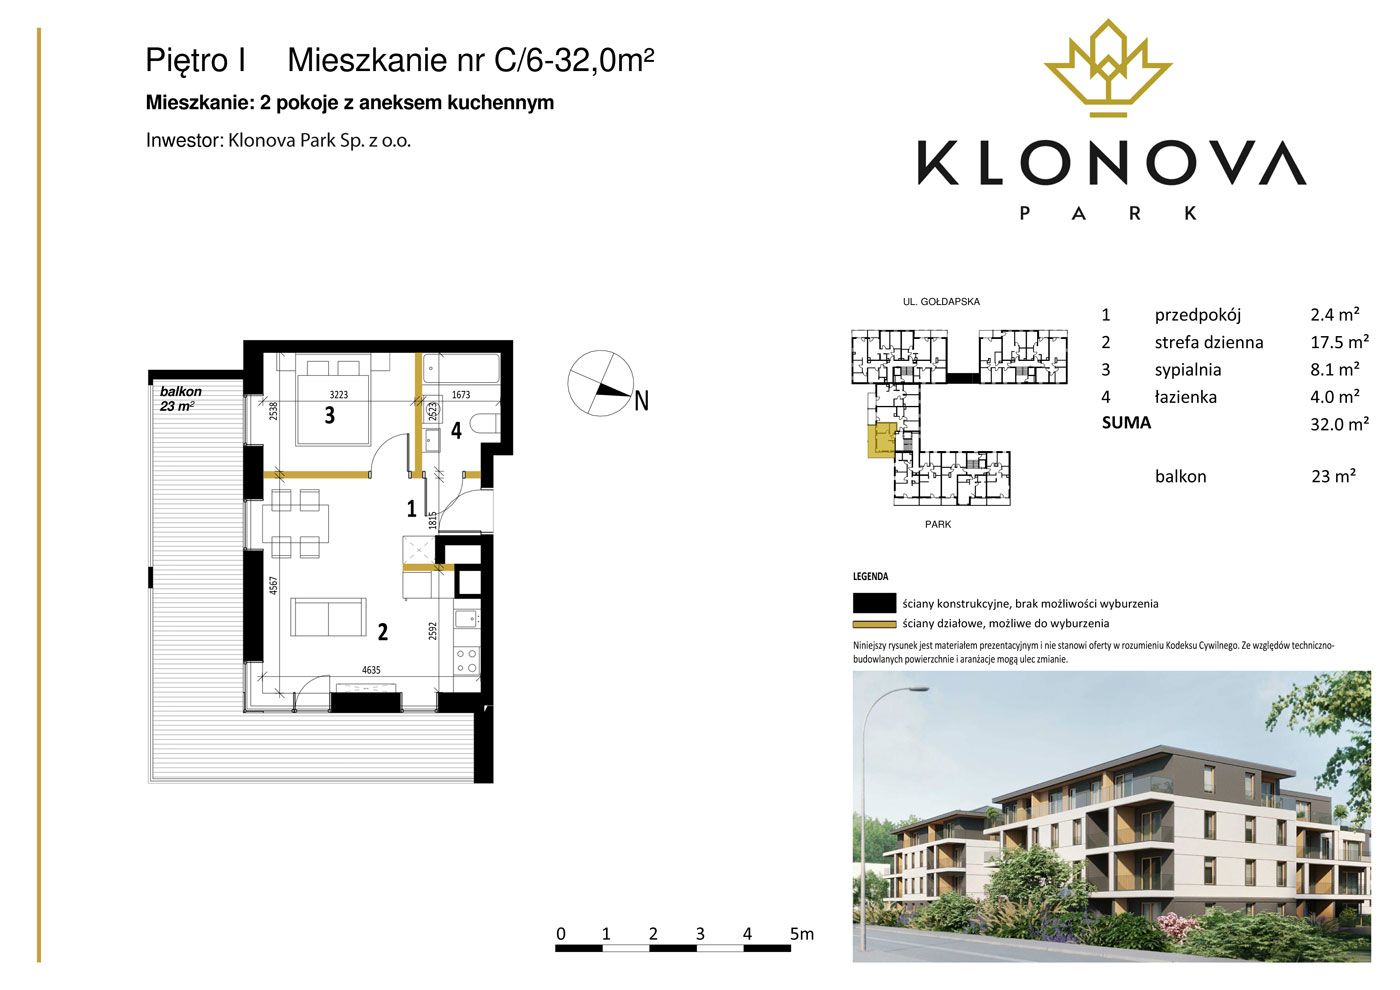 Apartamenty Klonova Park - Plan mieszkania C/6